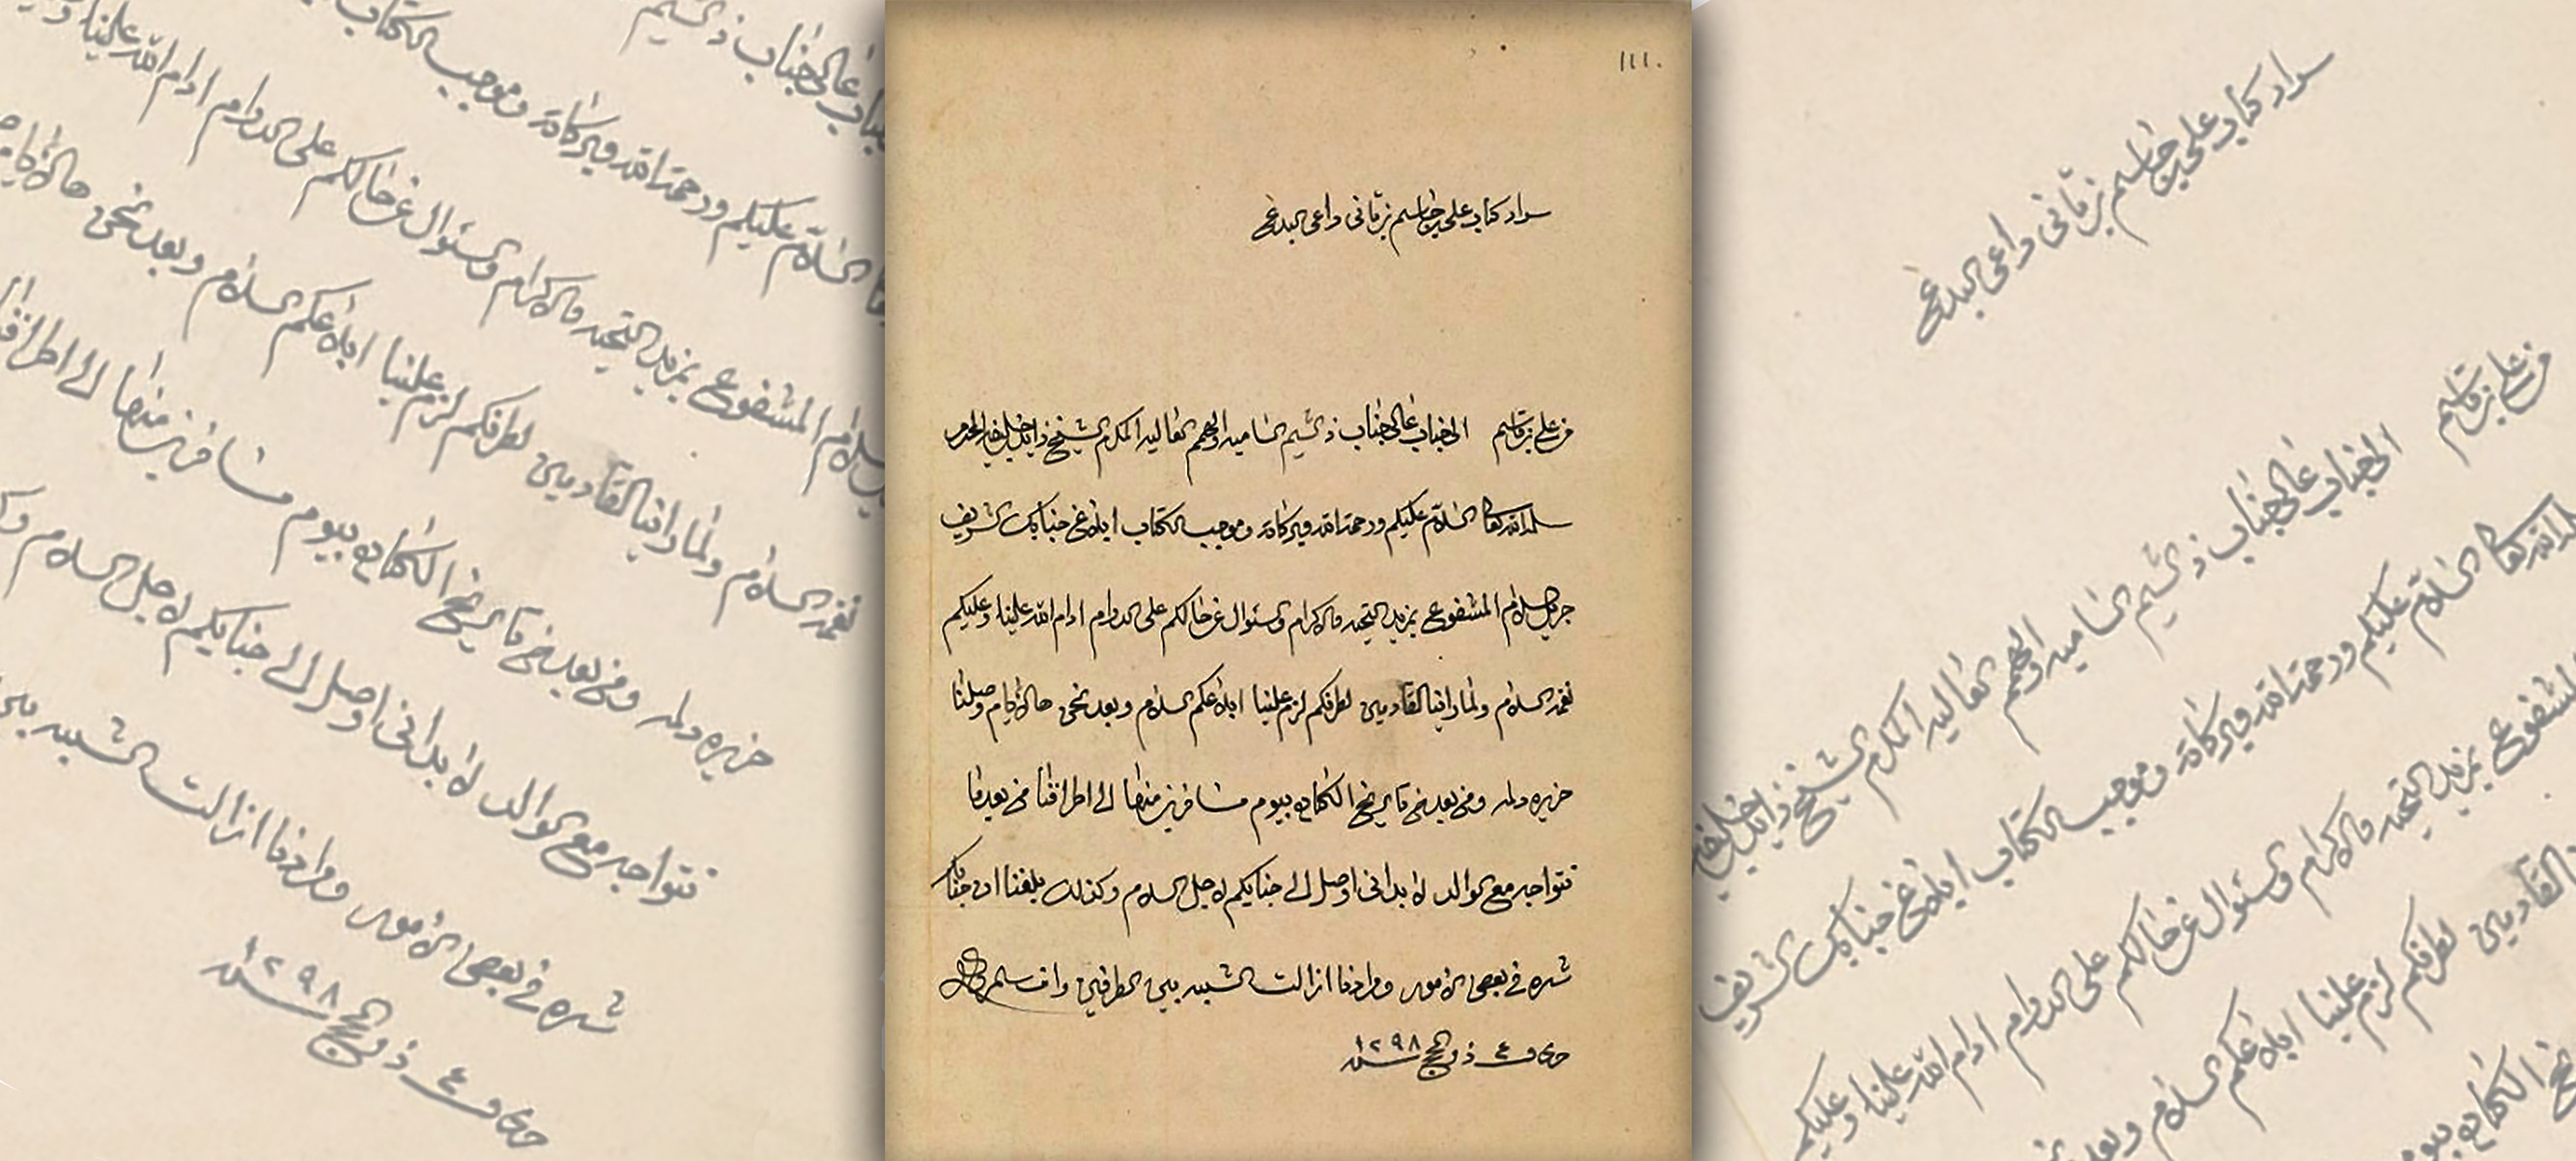 Arabic Document